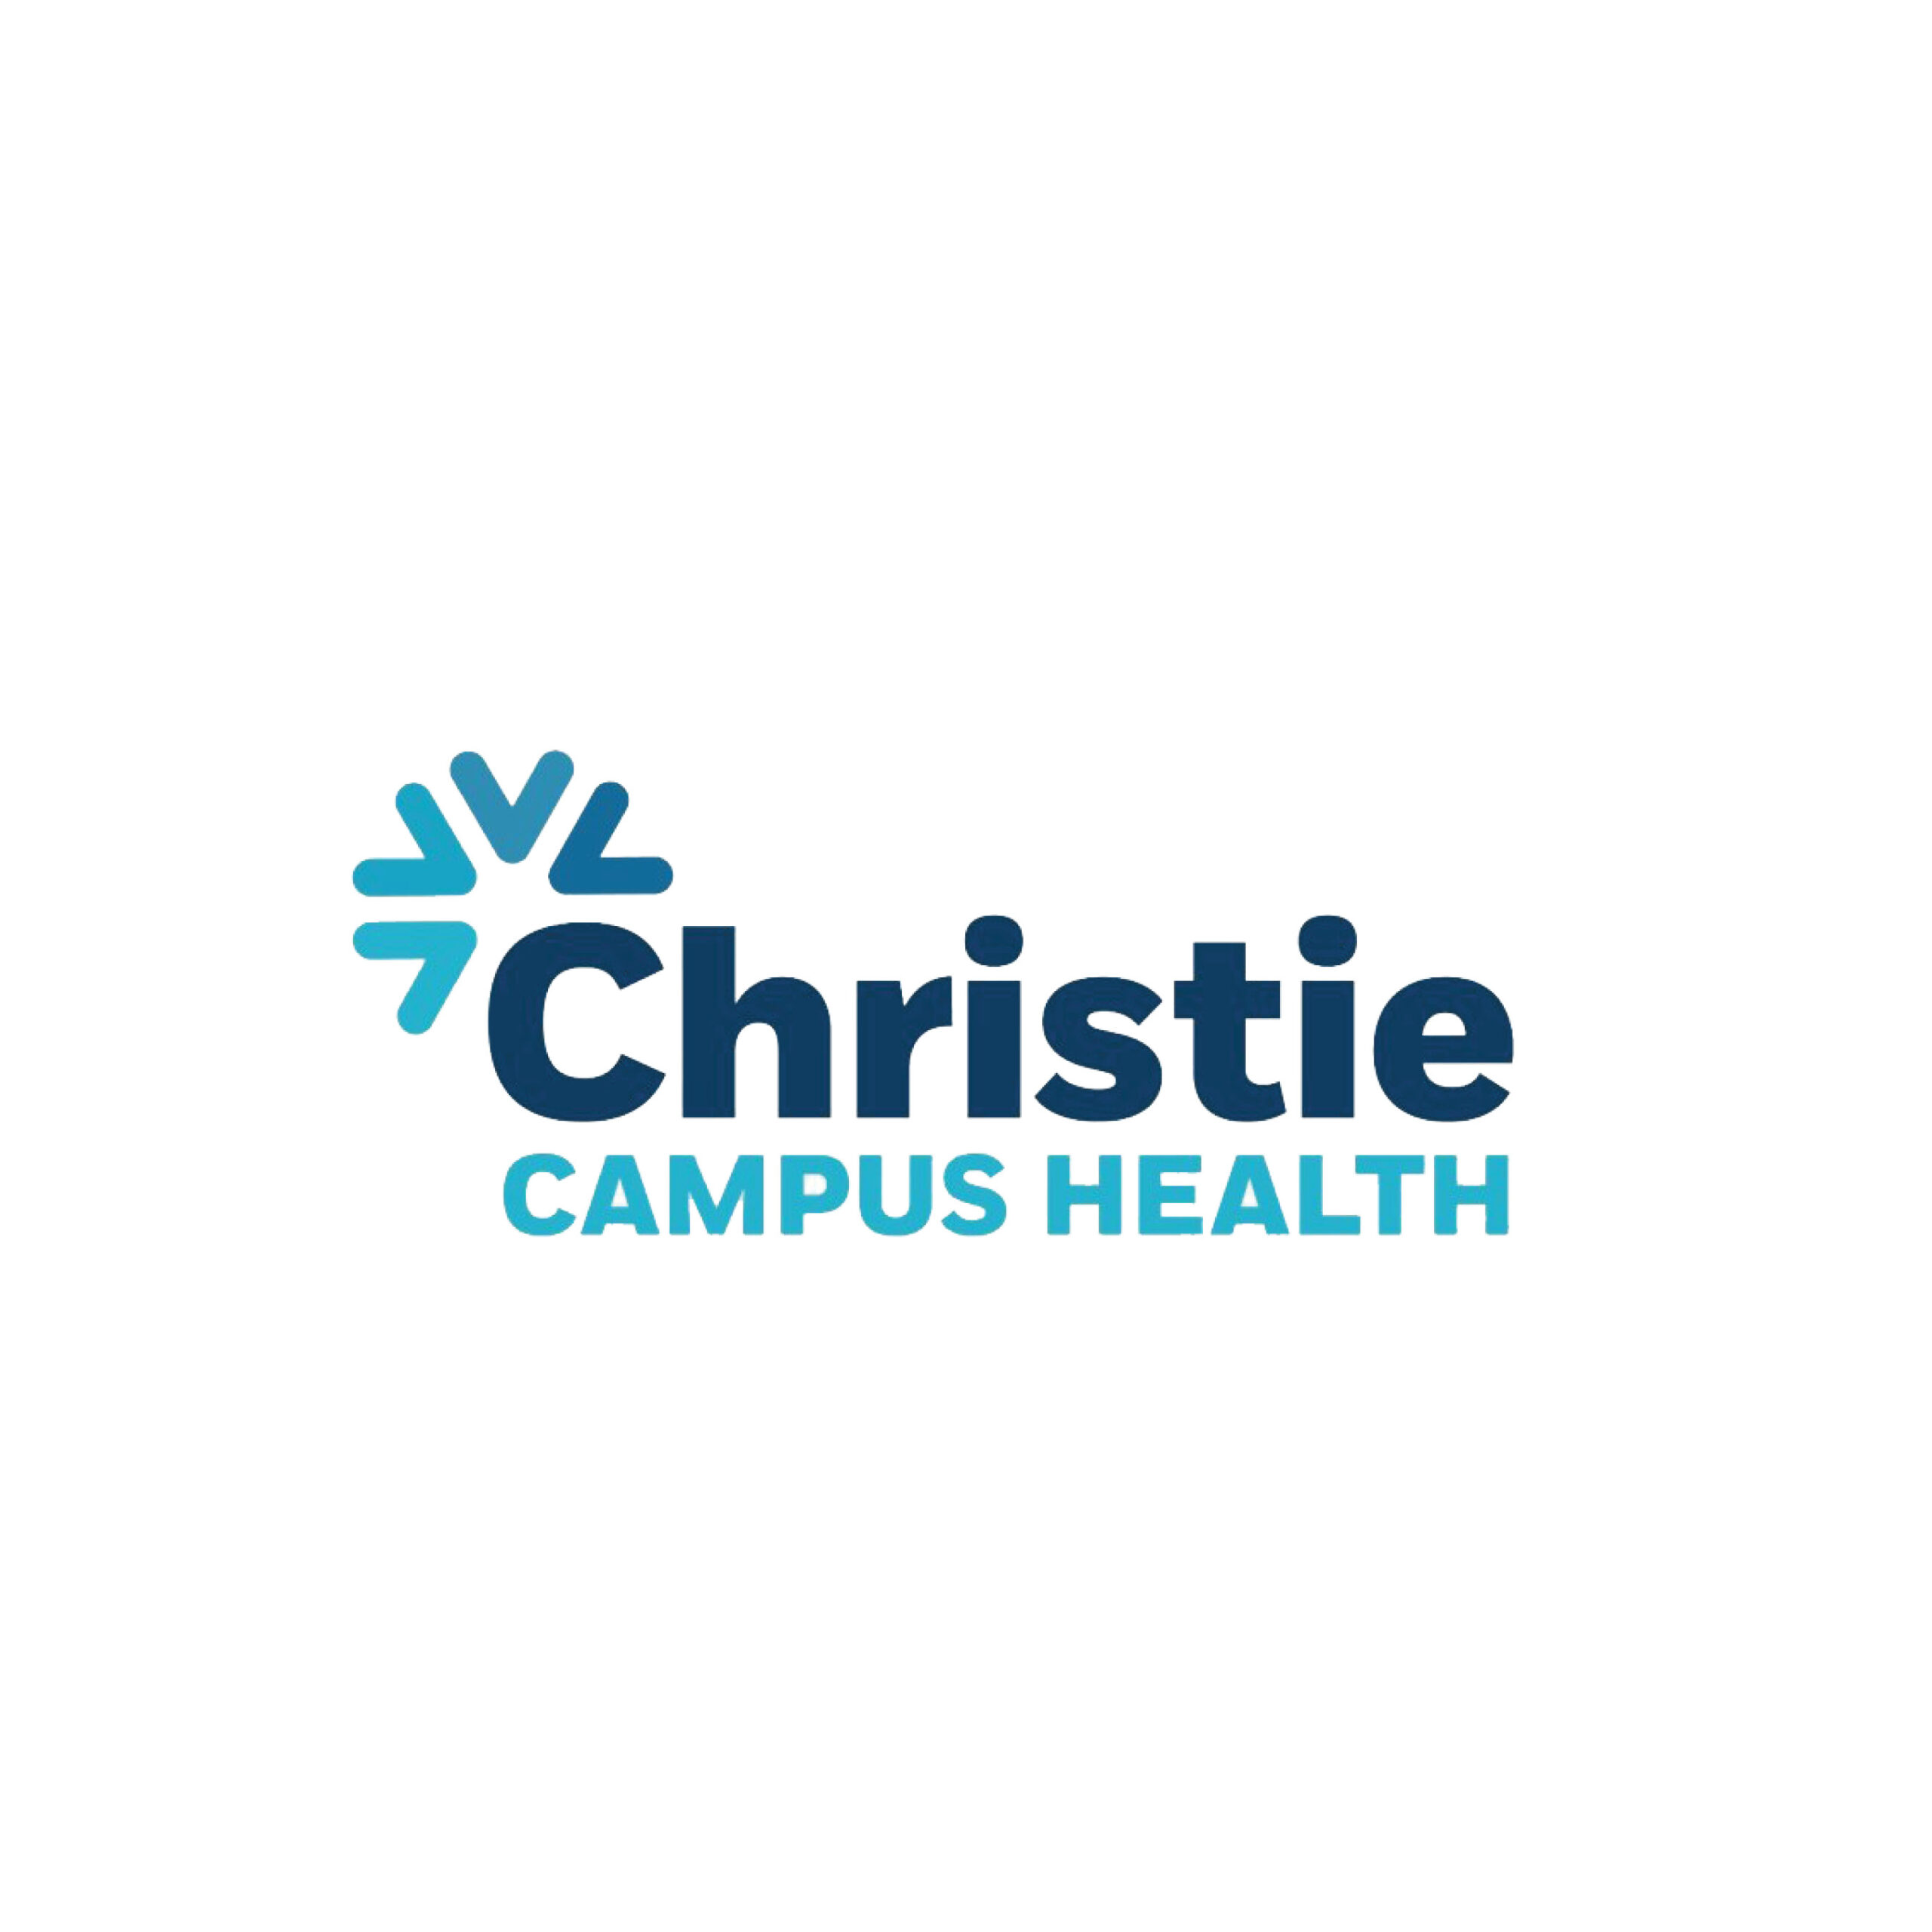 Christie Campus Health